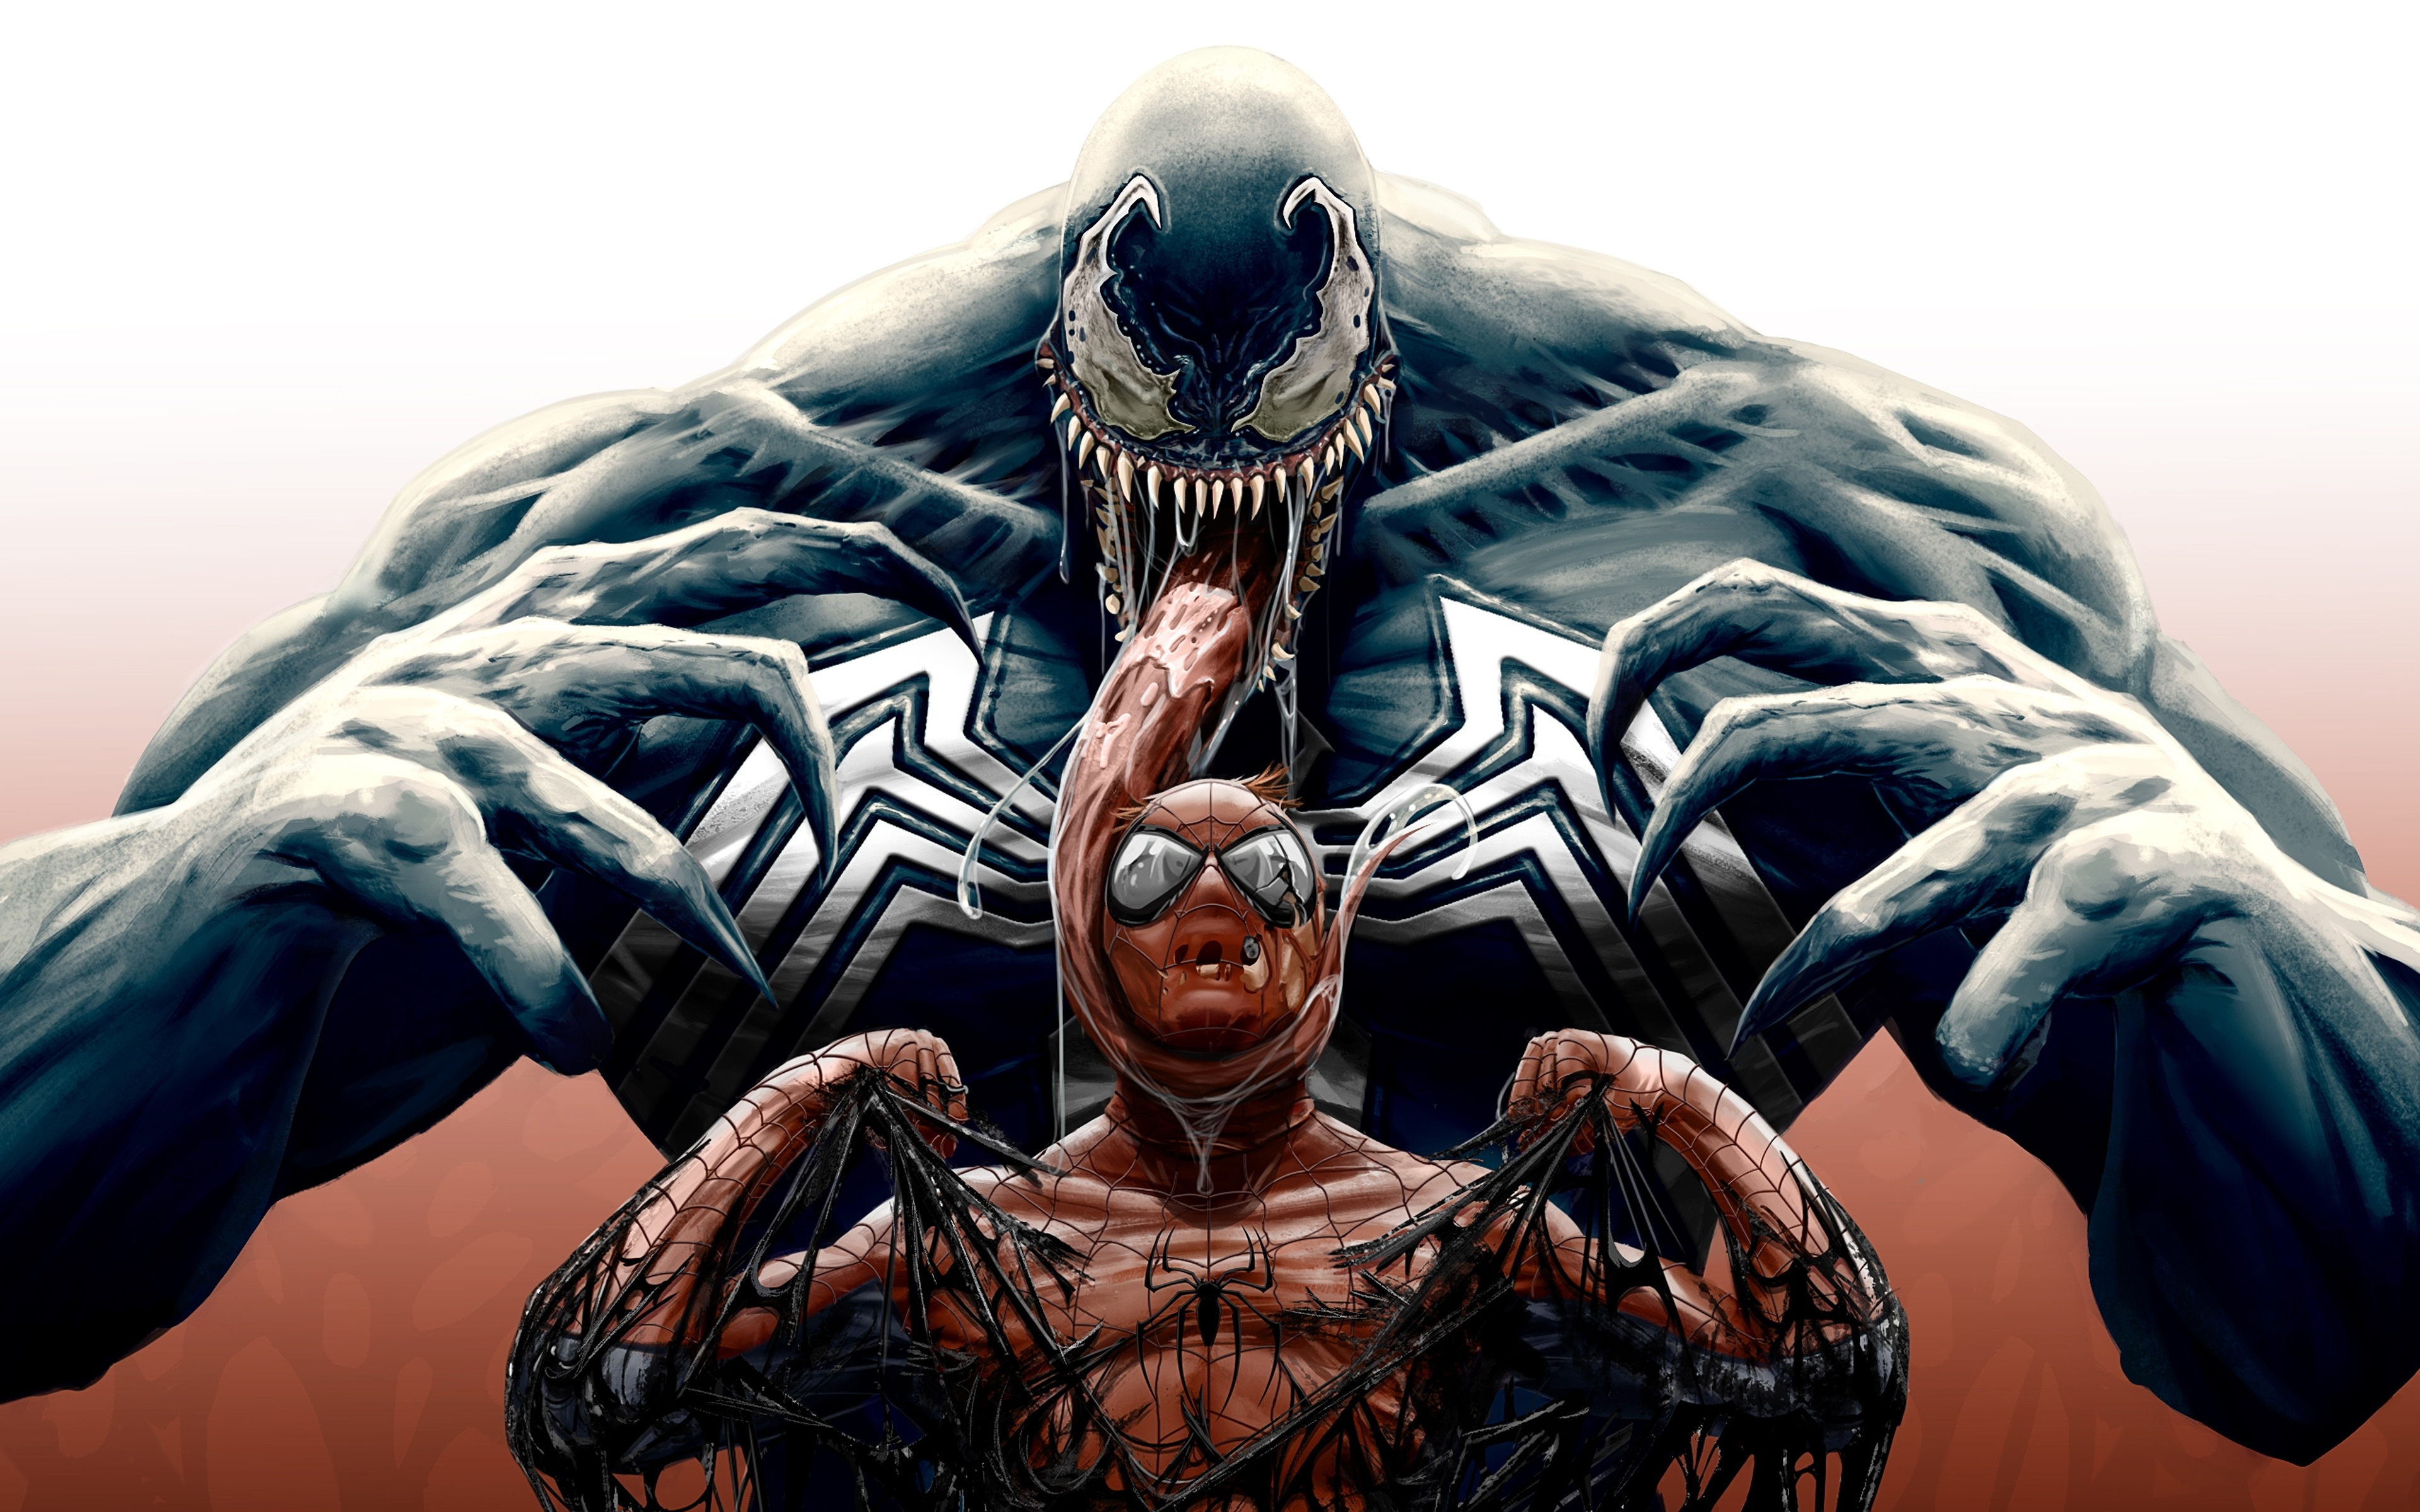 Download wallpaper 3840x2400 spider-man, venom, marvel comics, superheroes,  art 4k wallaper, 4k ultra hd 16:10 wallpaper, 3840x2400 hd background, 10336